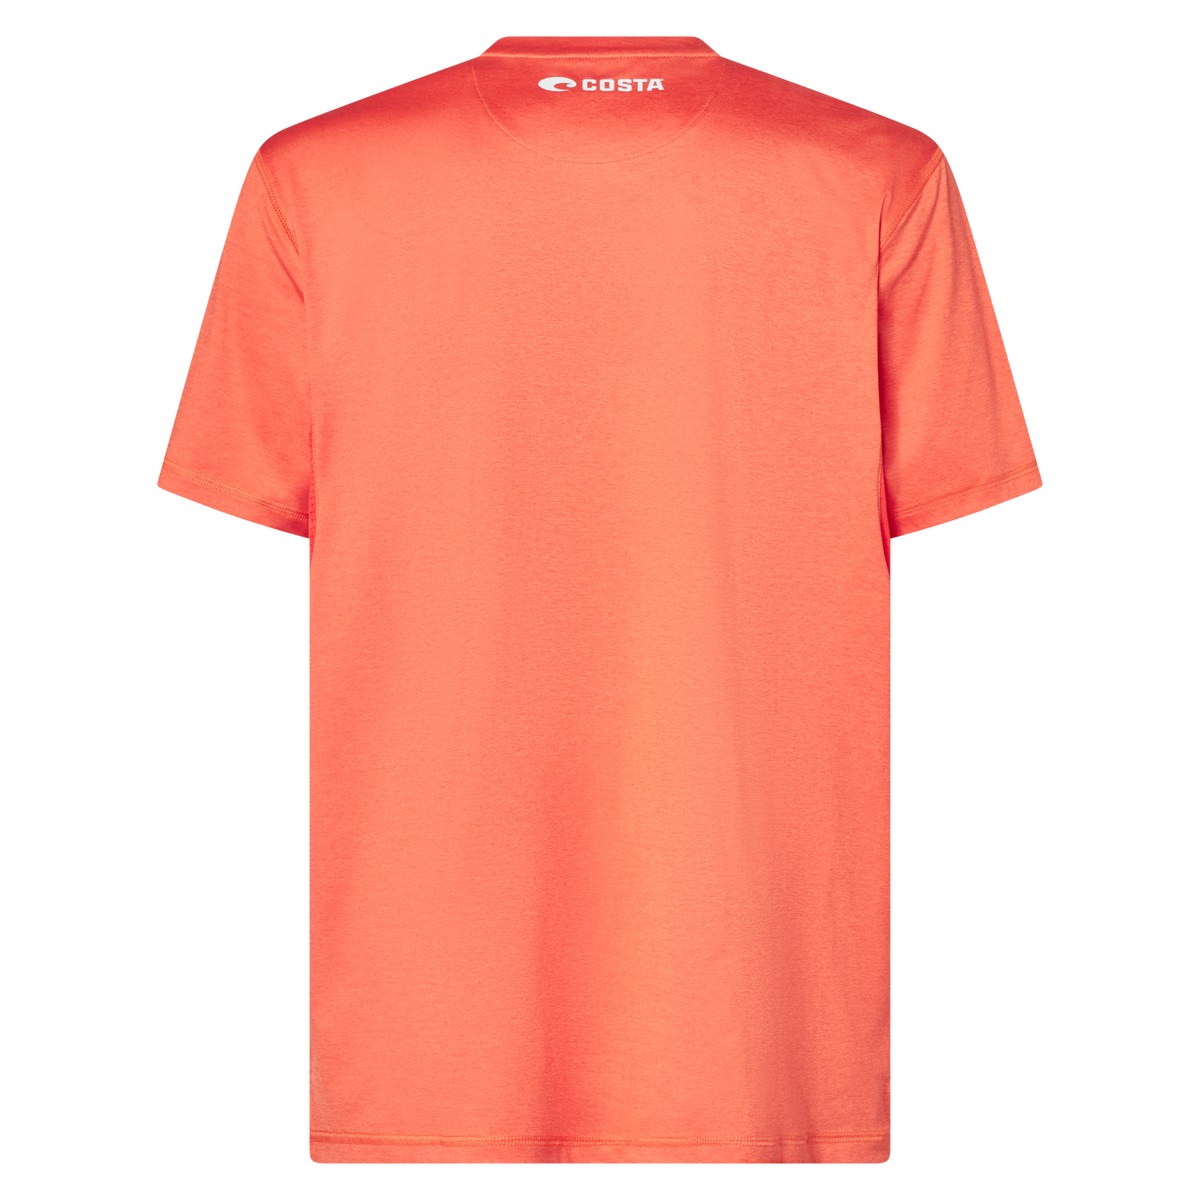 COSTA Voyager Short Sleeve Performance Shirt